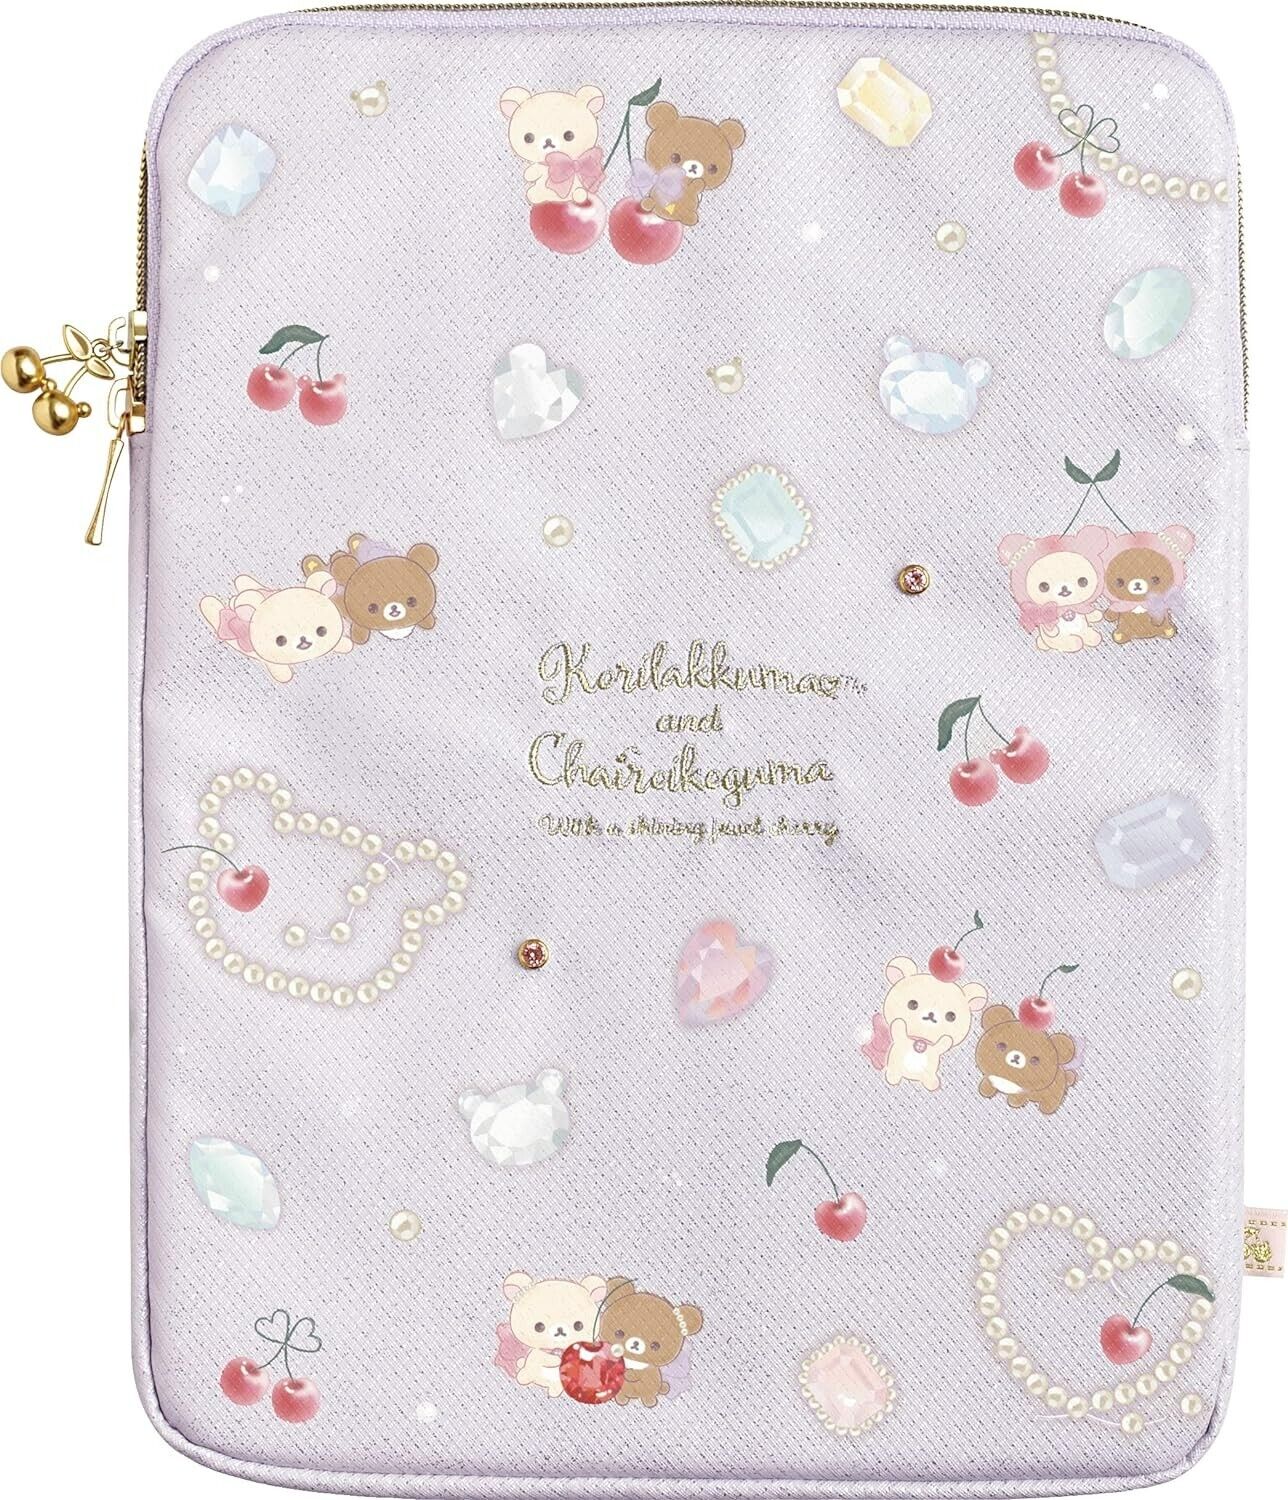 San-X Rilakkuma Tablet Case (Jewel Cherry) Korilakkuma Bag Pouch New Japan